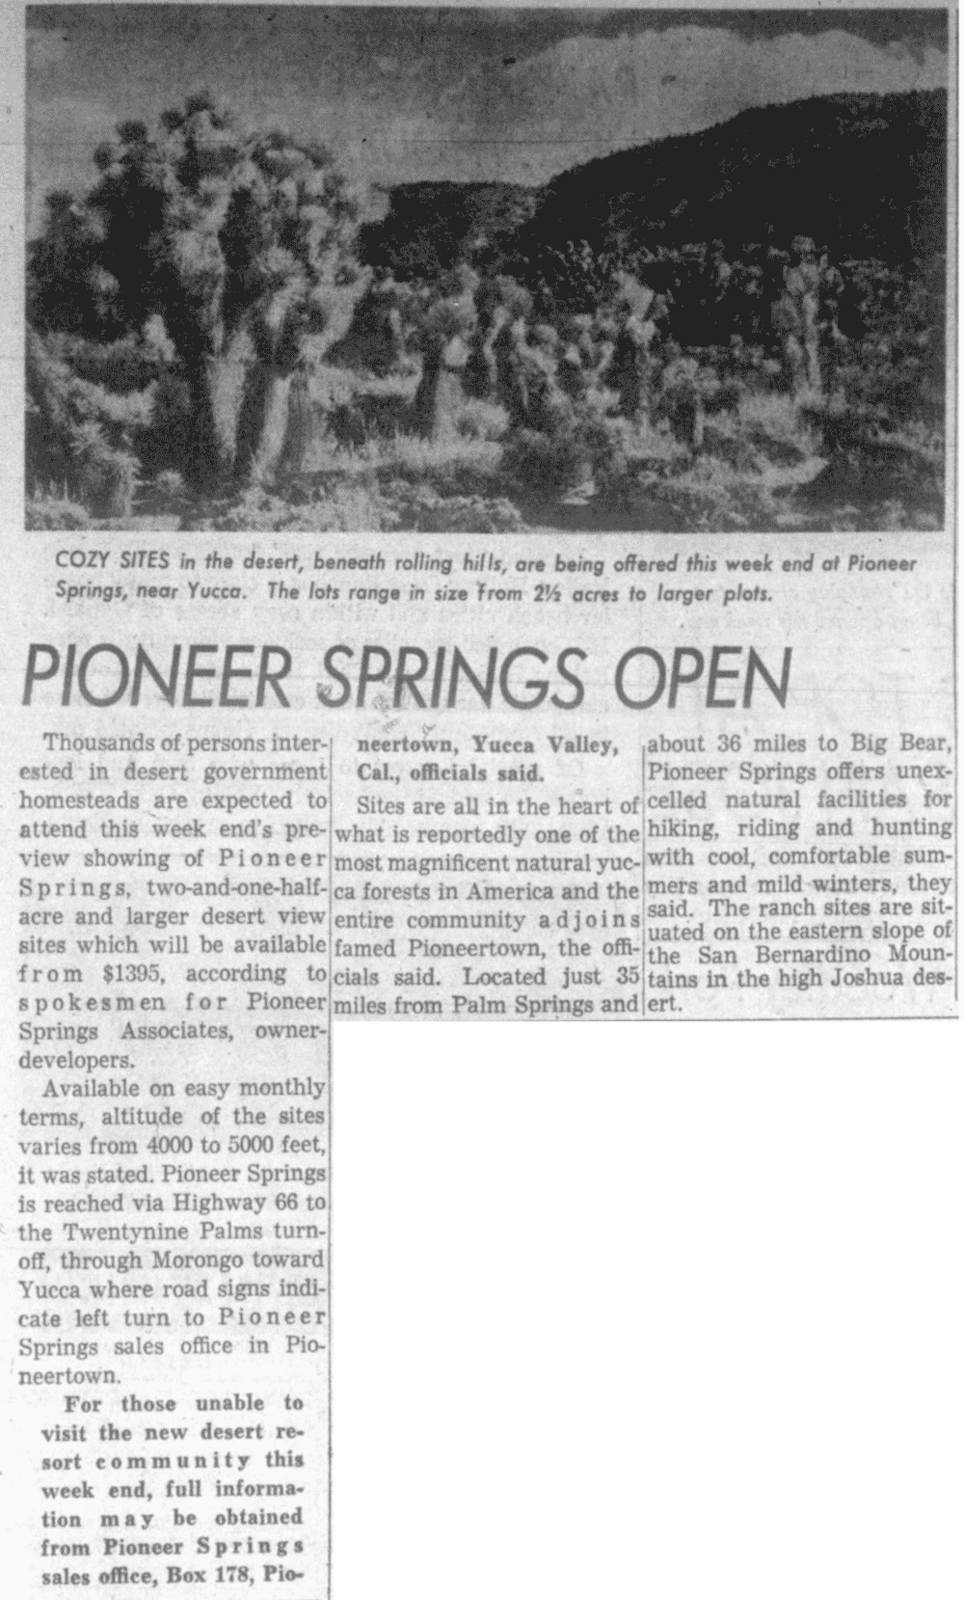 Apr. 12, 1957 - Mirror News clipping